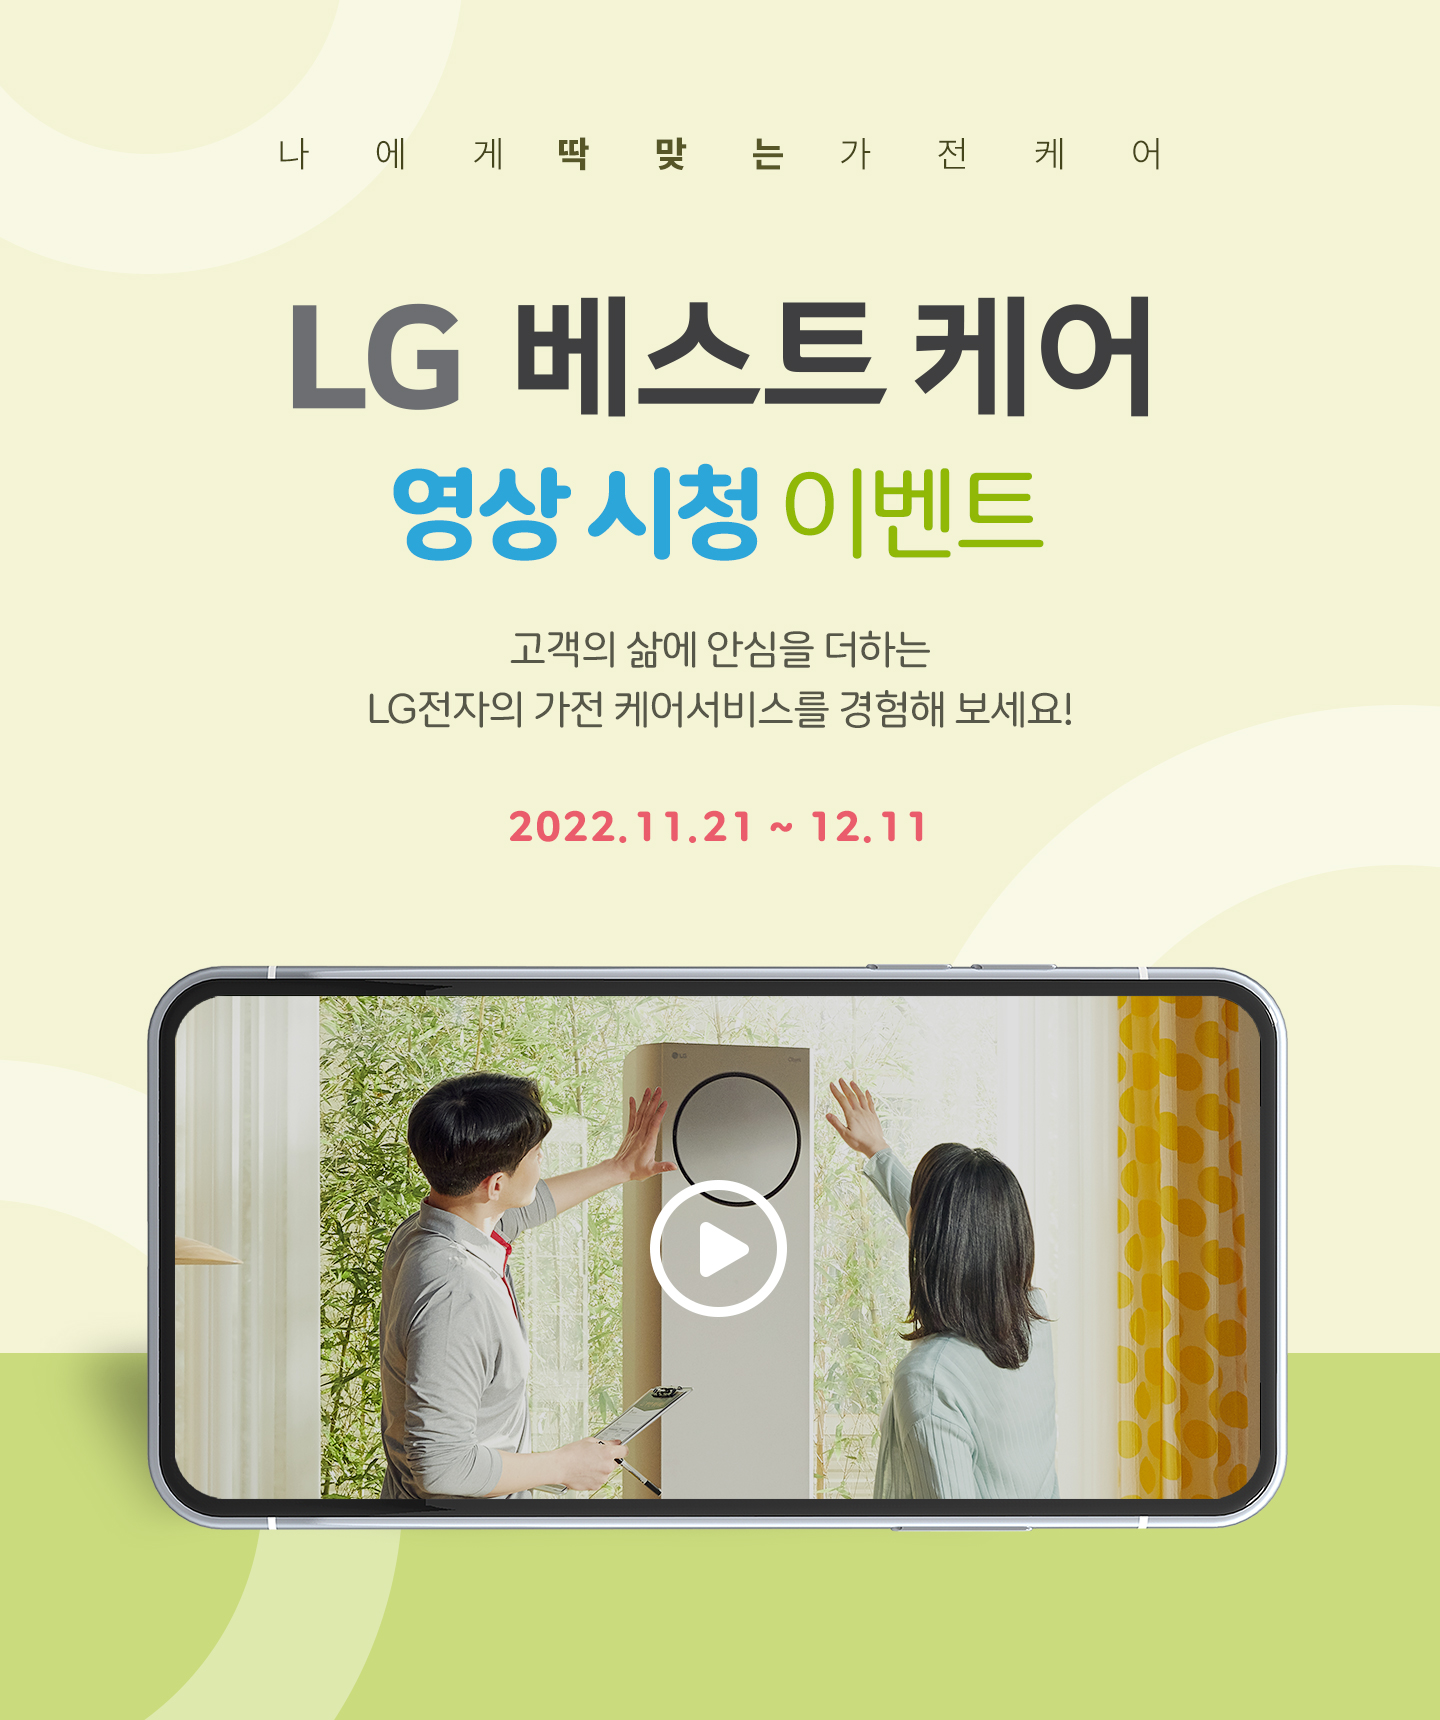 LG 베스트 케어 영상 시청 이벤트